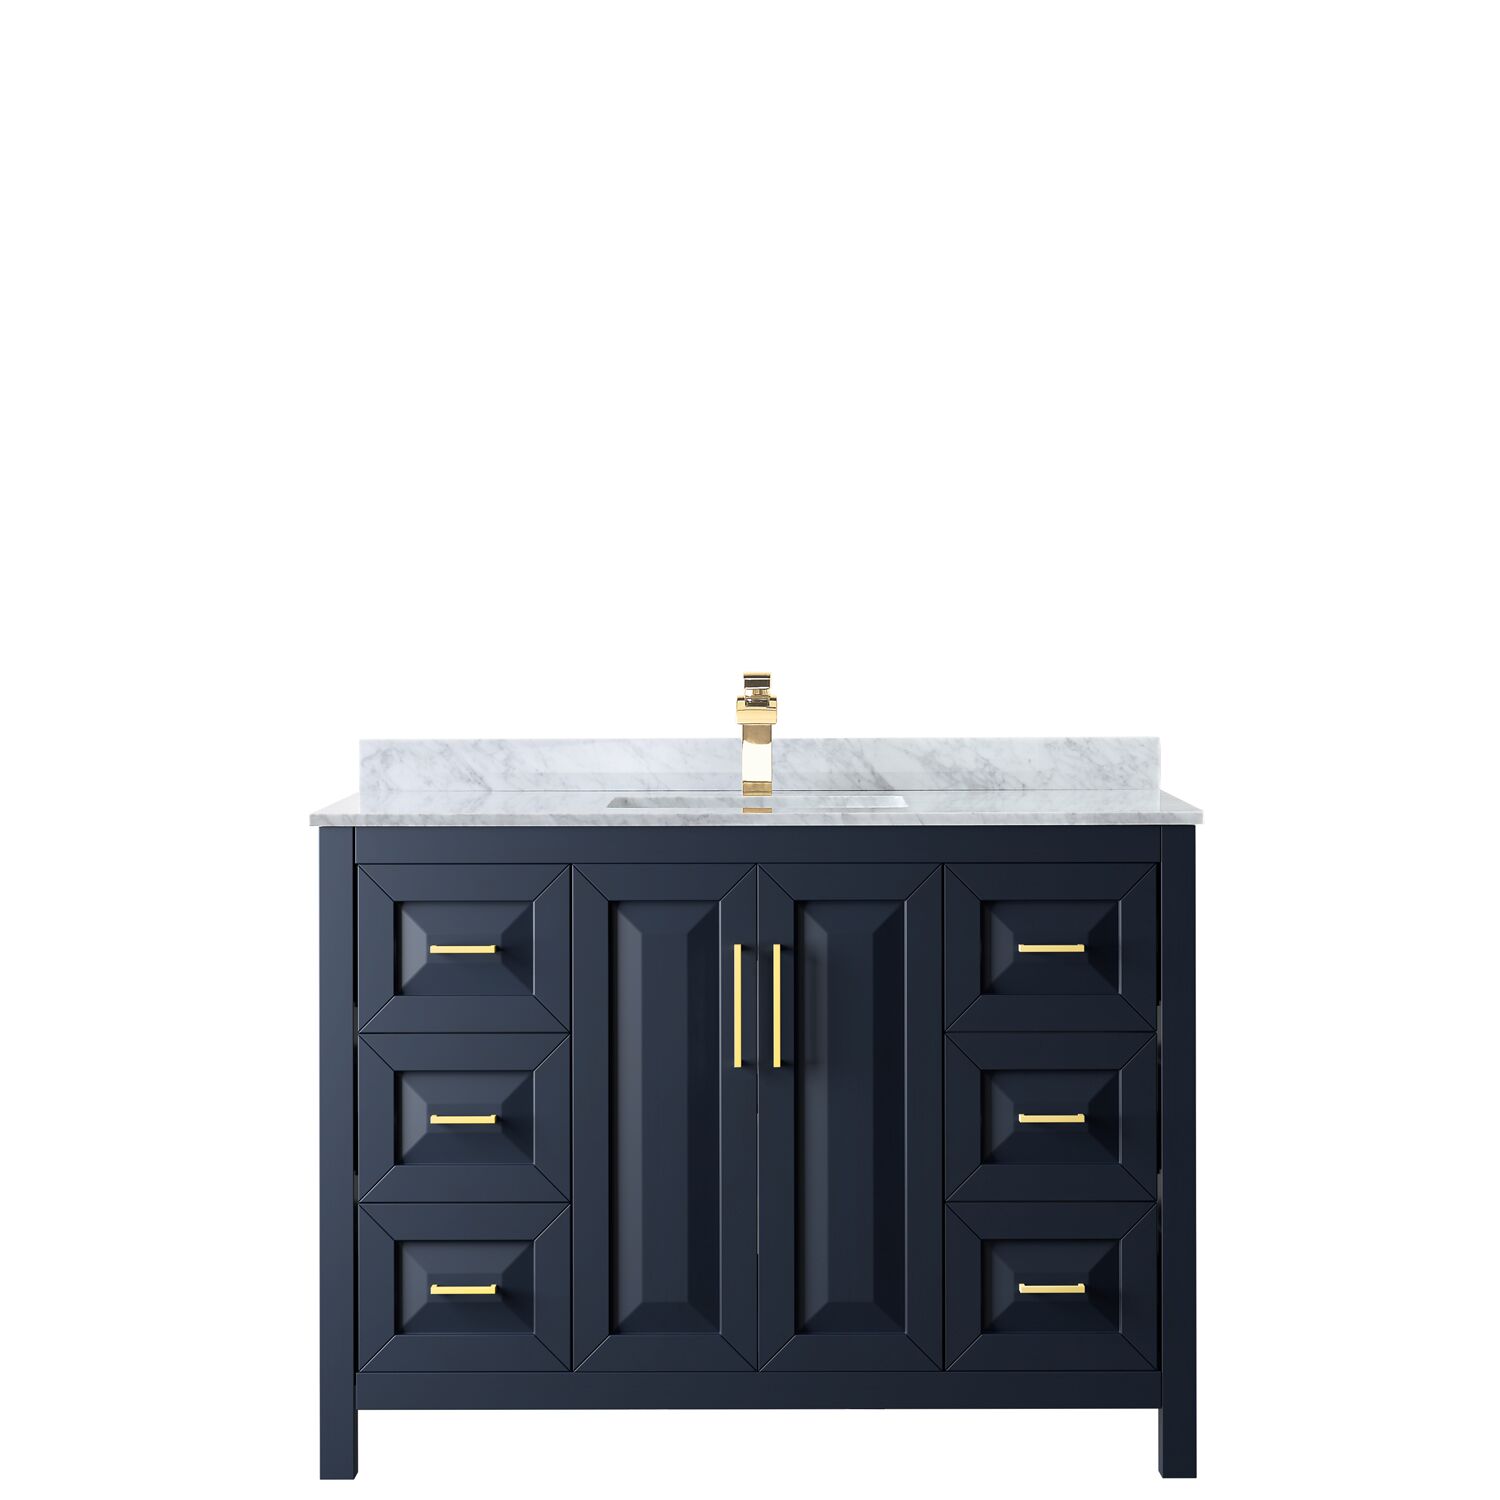 48" Single Bathroom Vanity in Dark Blue with Countertop, Mirror and Medicine Cabinet Options